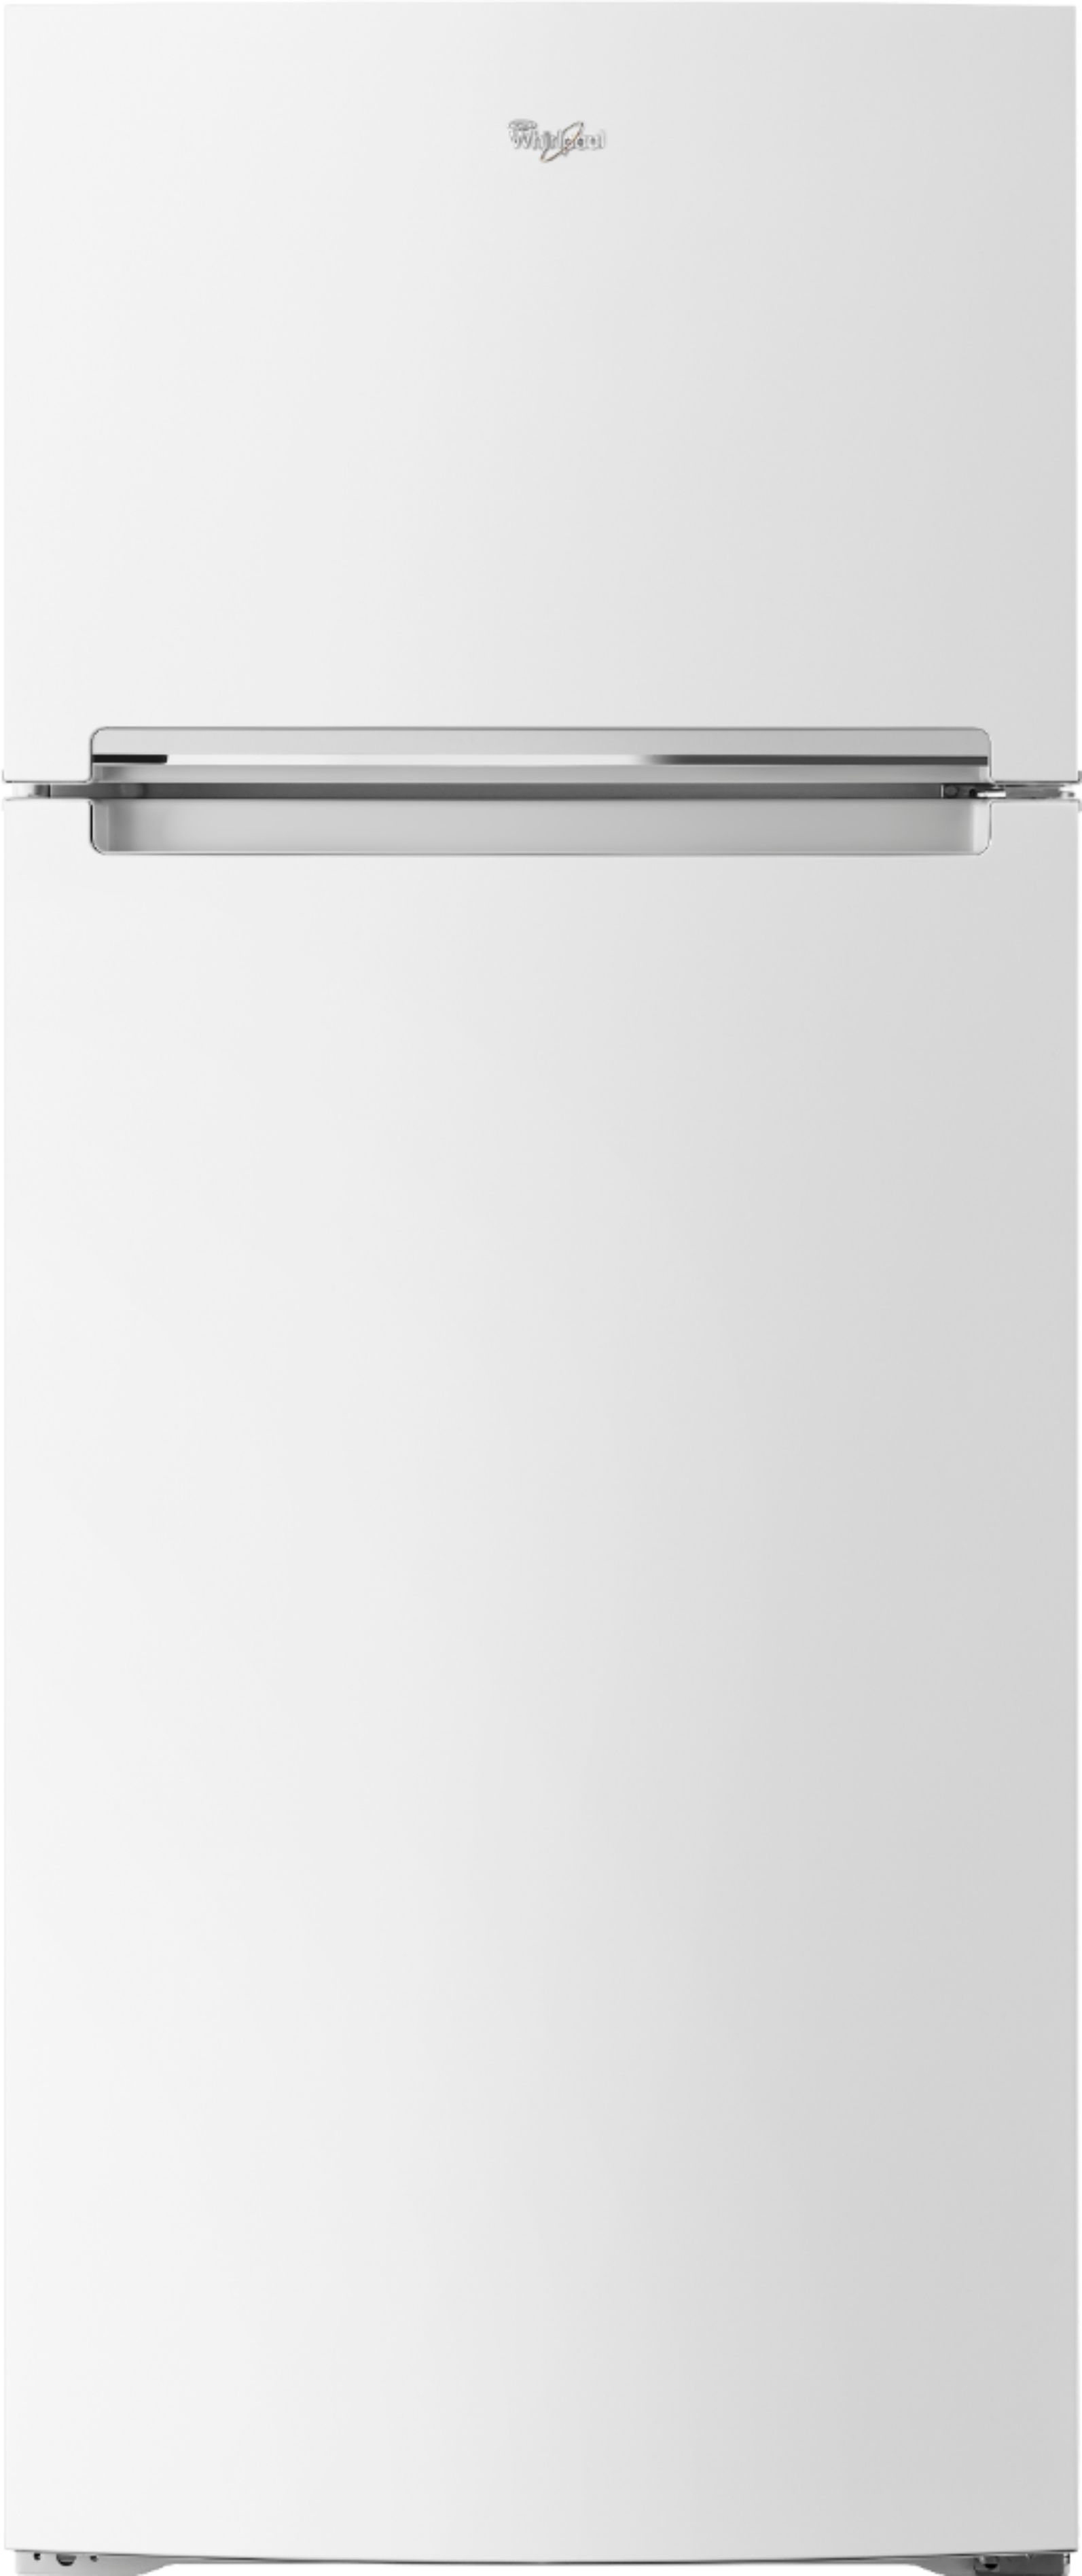 Whirlpool - 17.7 Cu. Ft. Top-Freezer Refrigerator - White